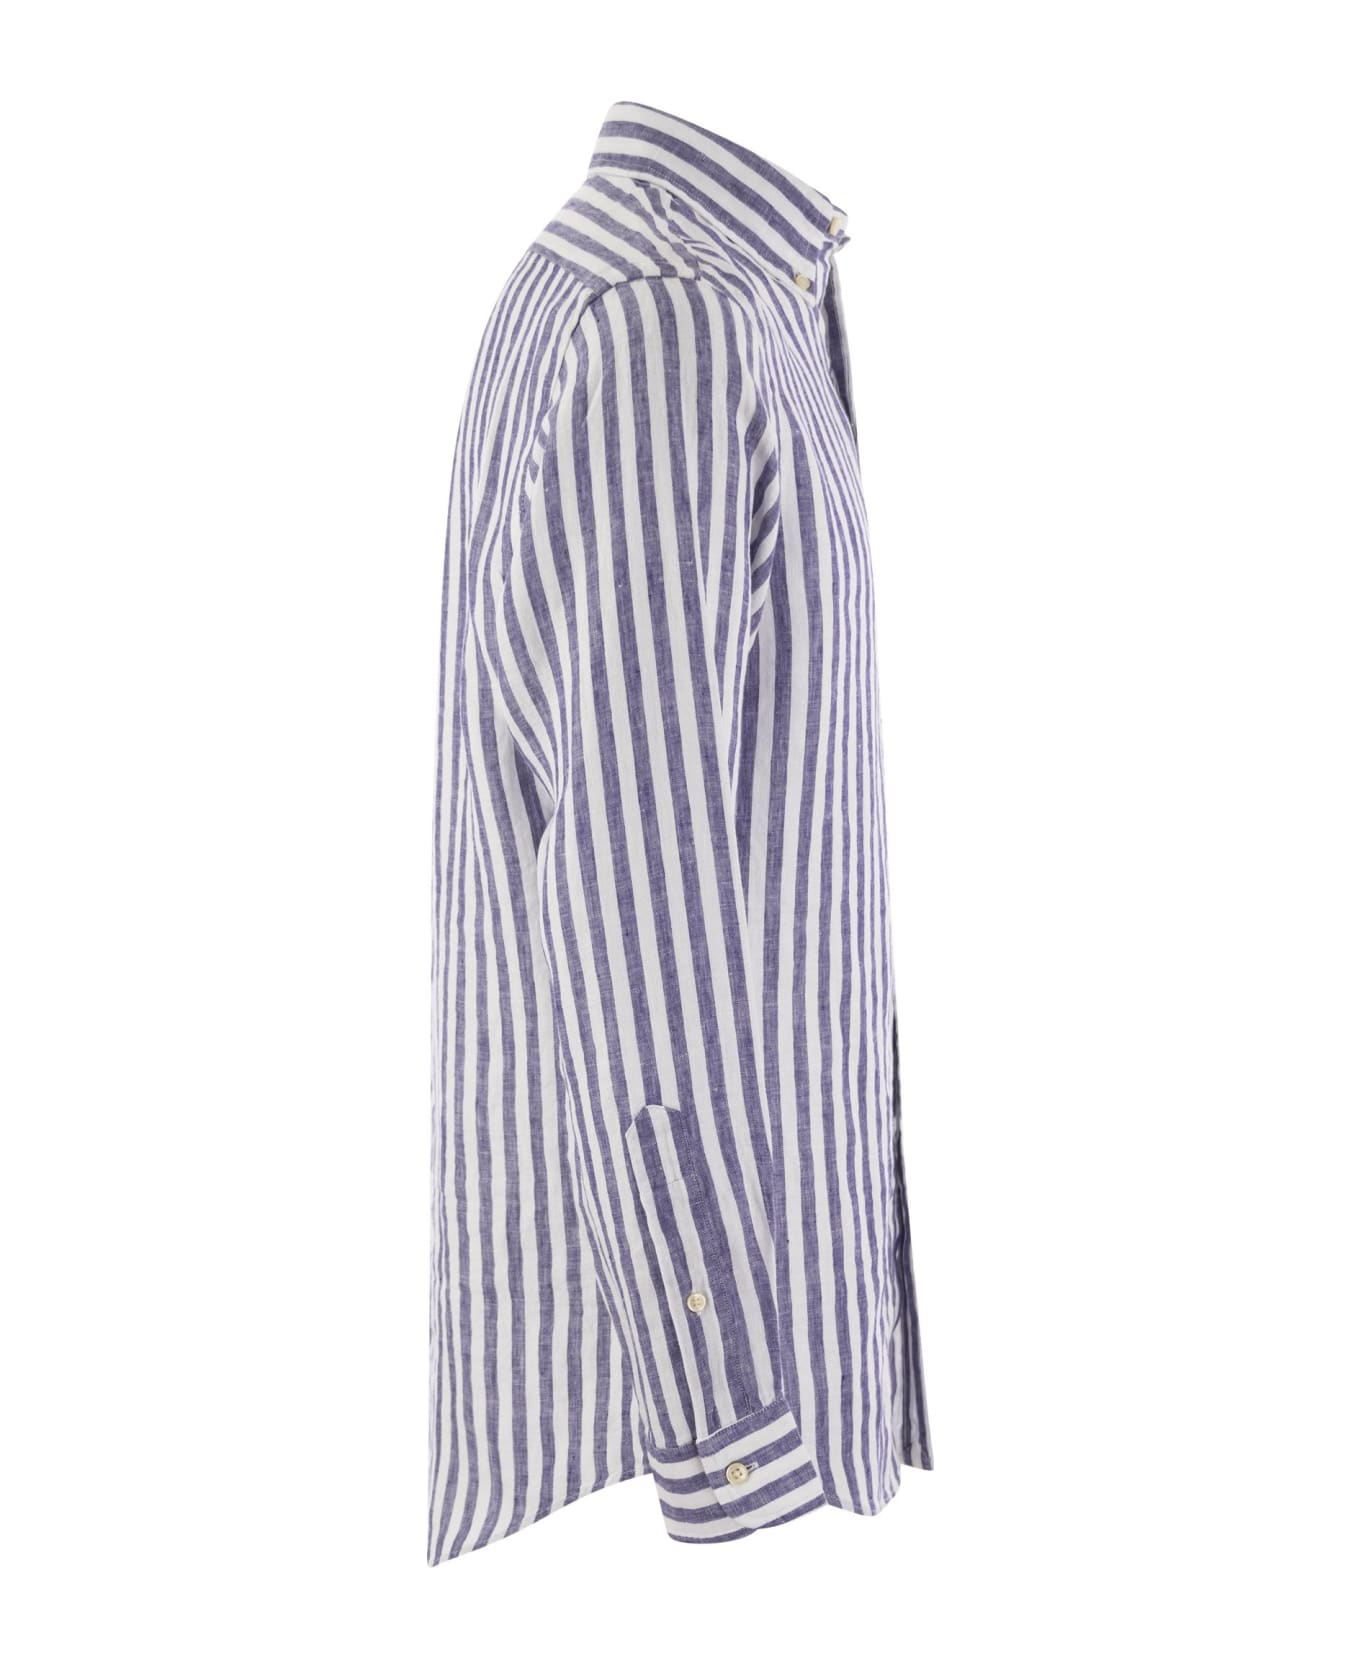 Polo Ralph Lauren Custom-fit Striped Linen Shirt - Blue/white